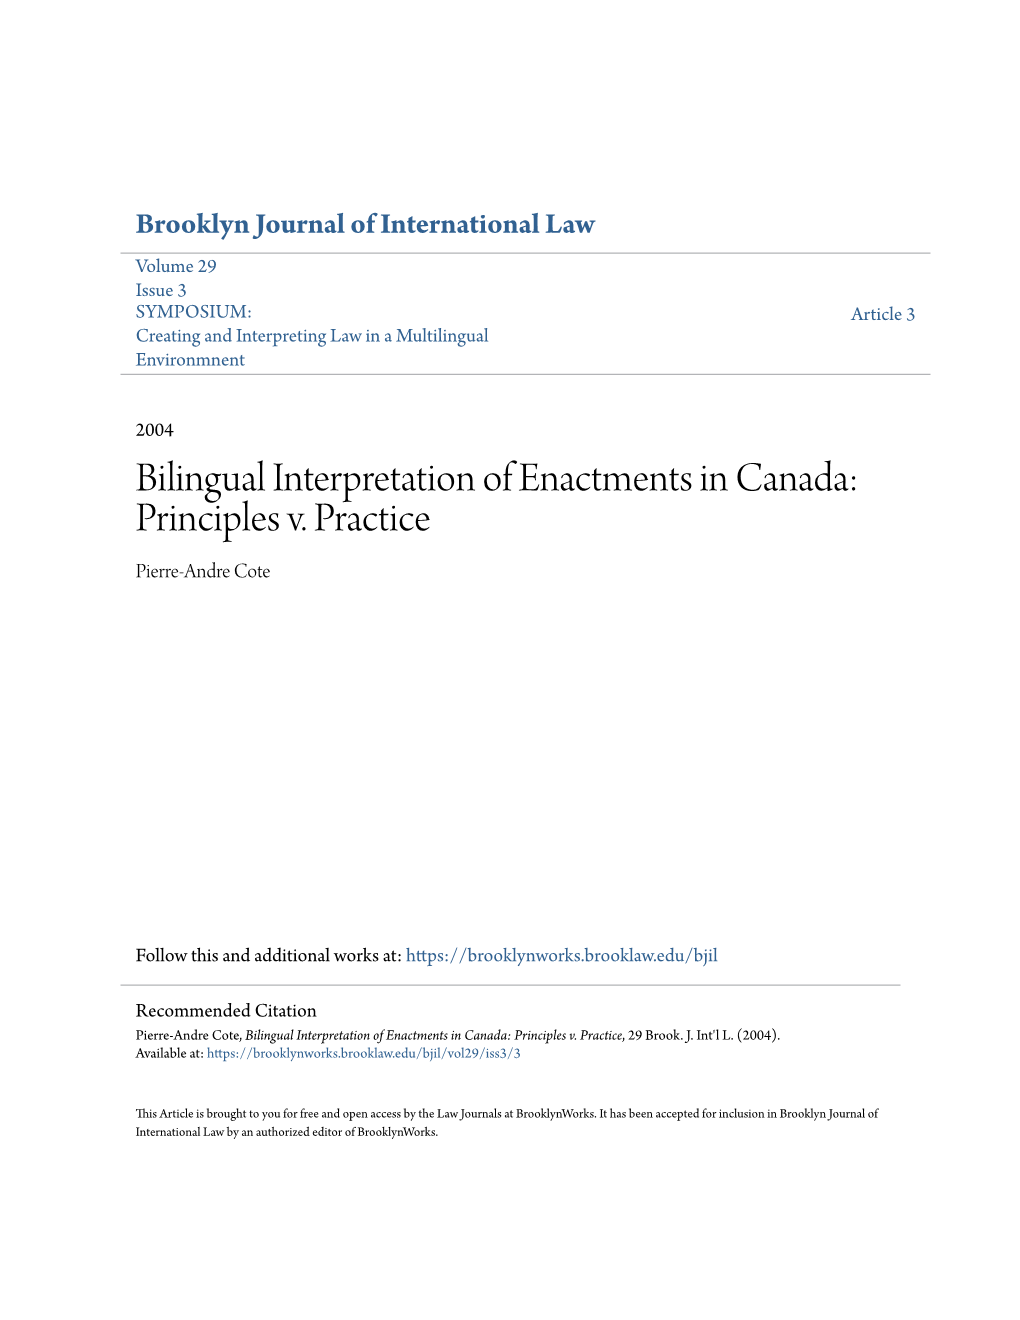 Bilingual Interpretation of Enactments in Canada: Principles V